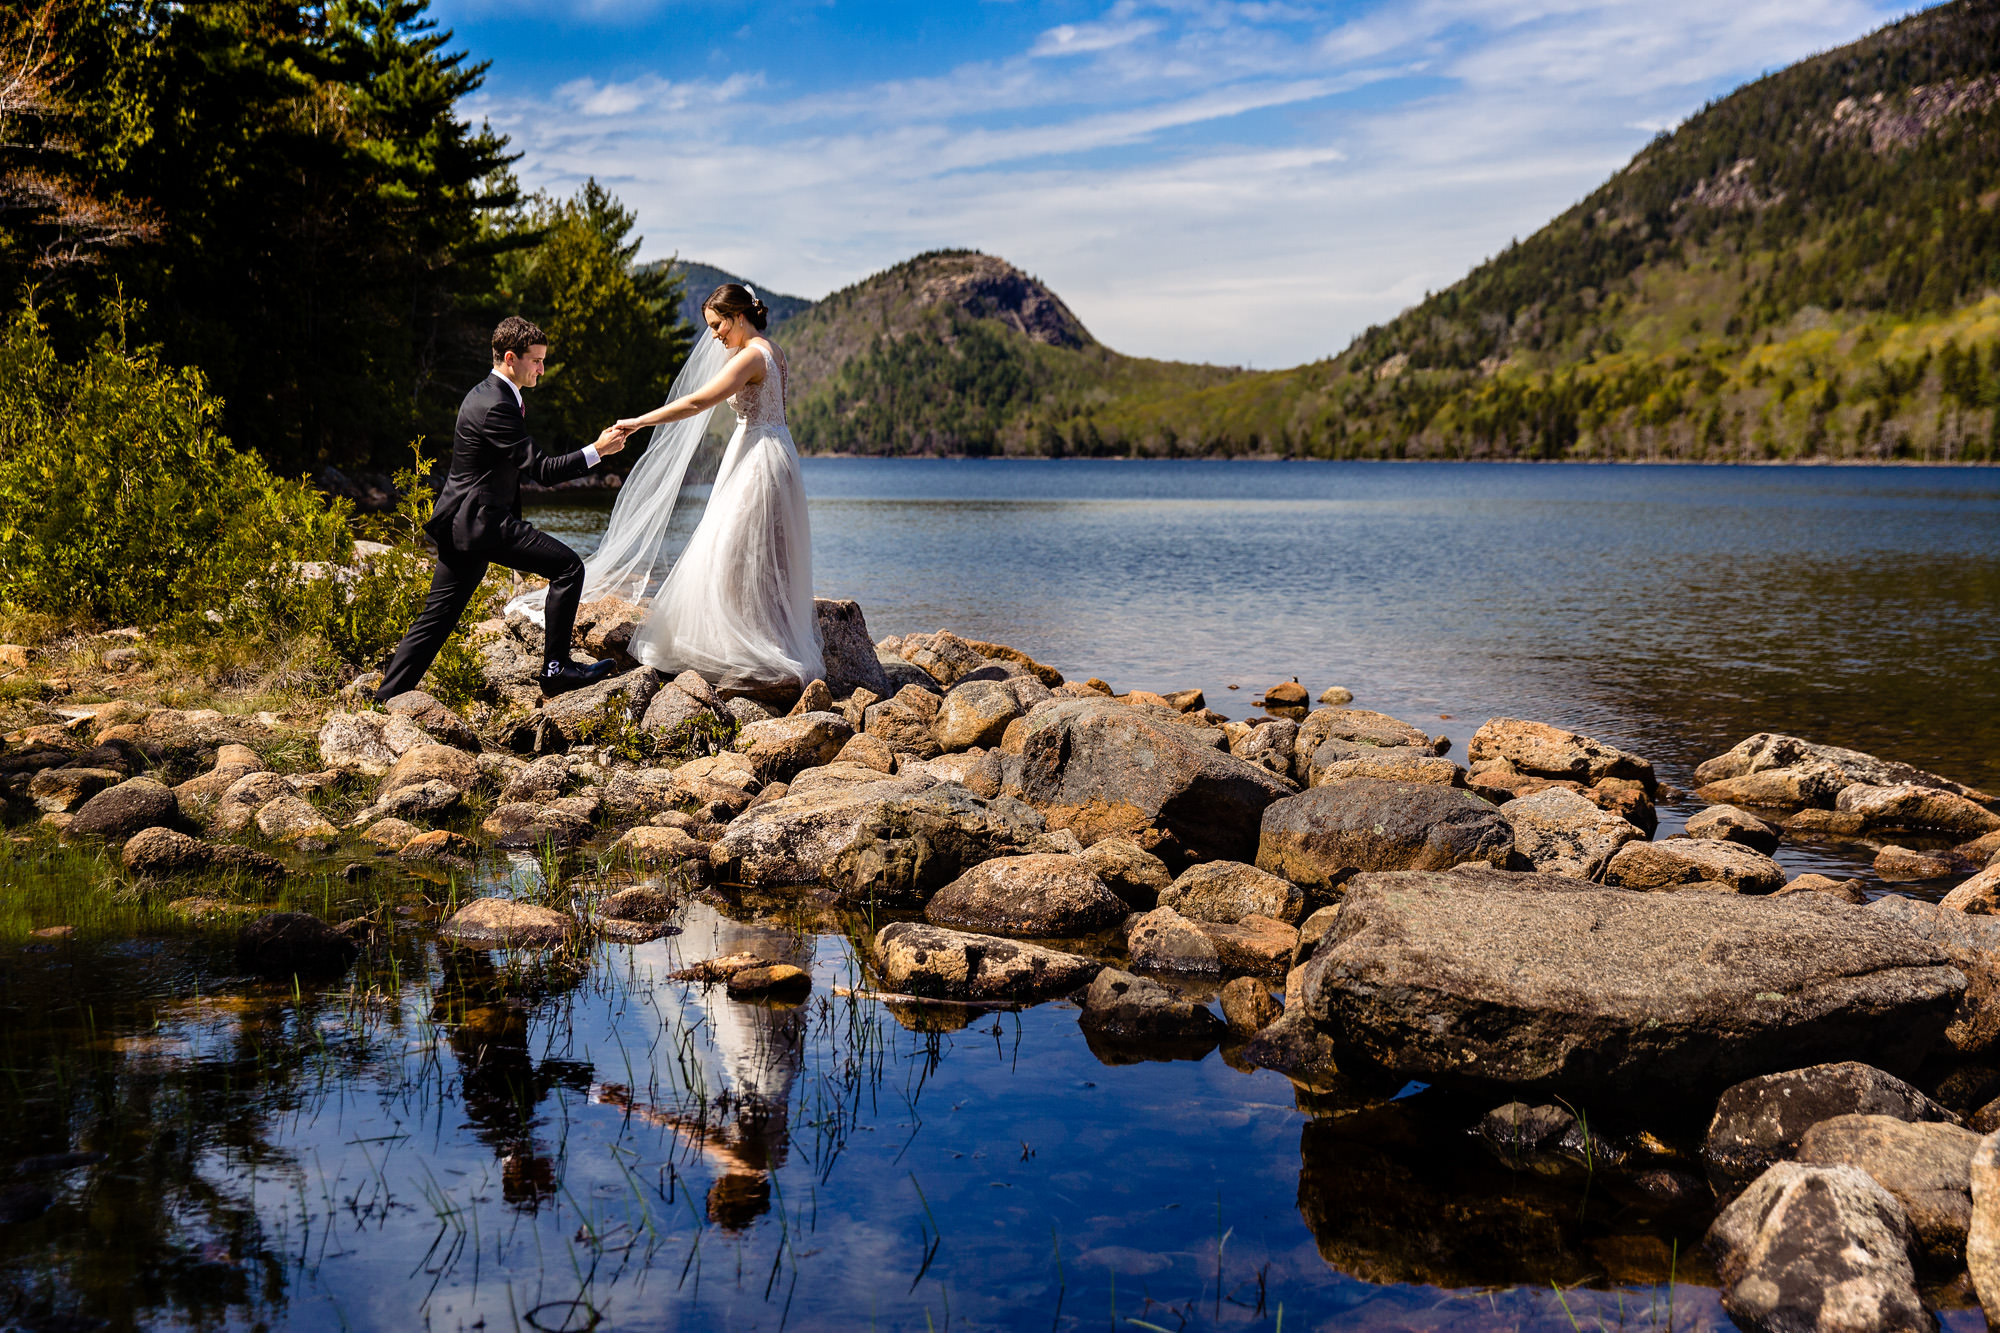 A bride and groom portrait at Jordan Pond in Acadia National Park